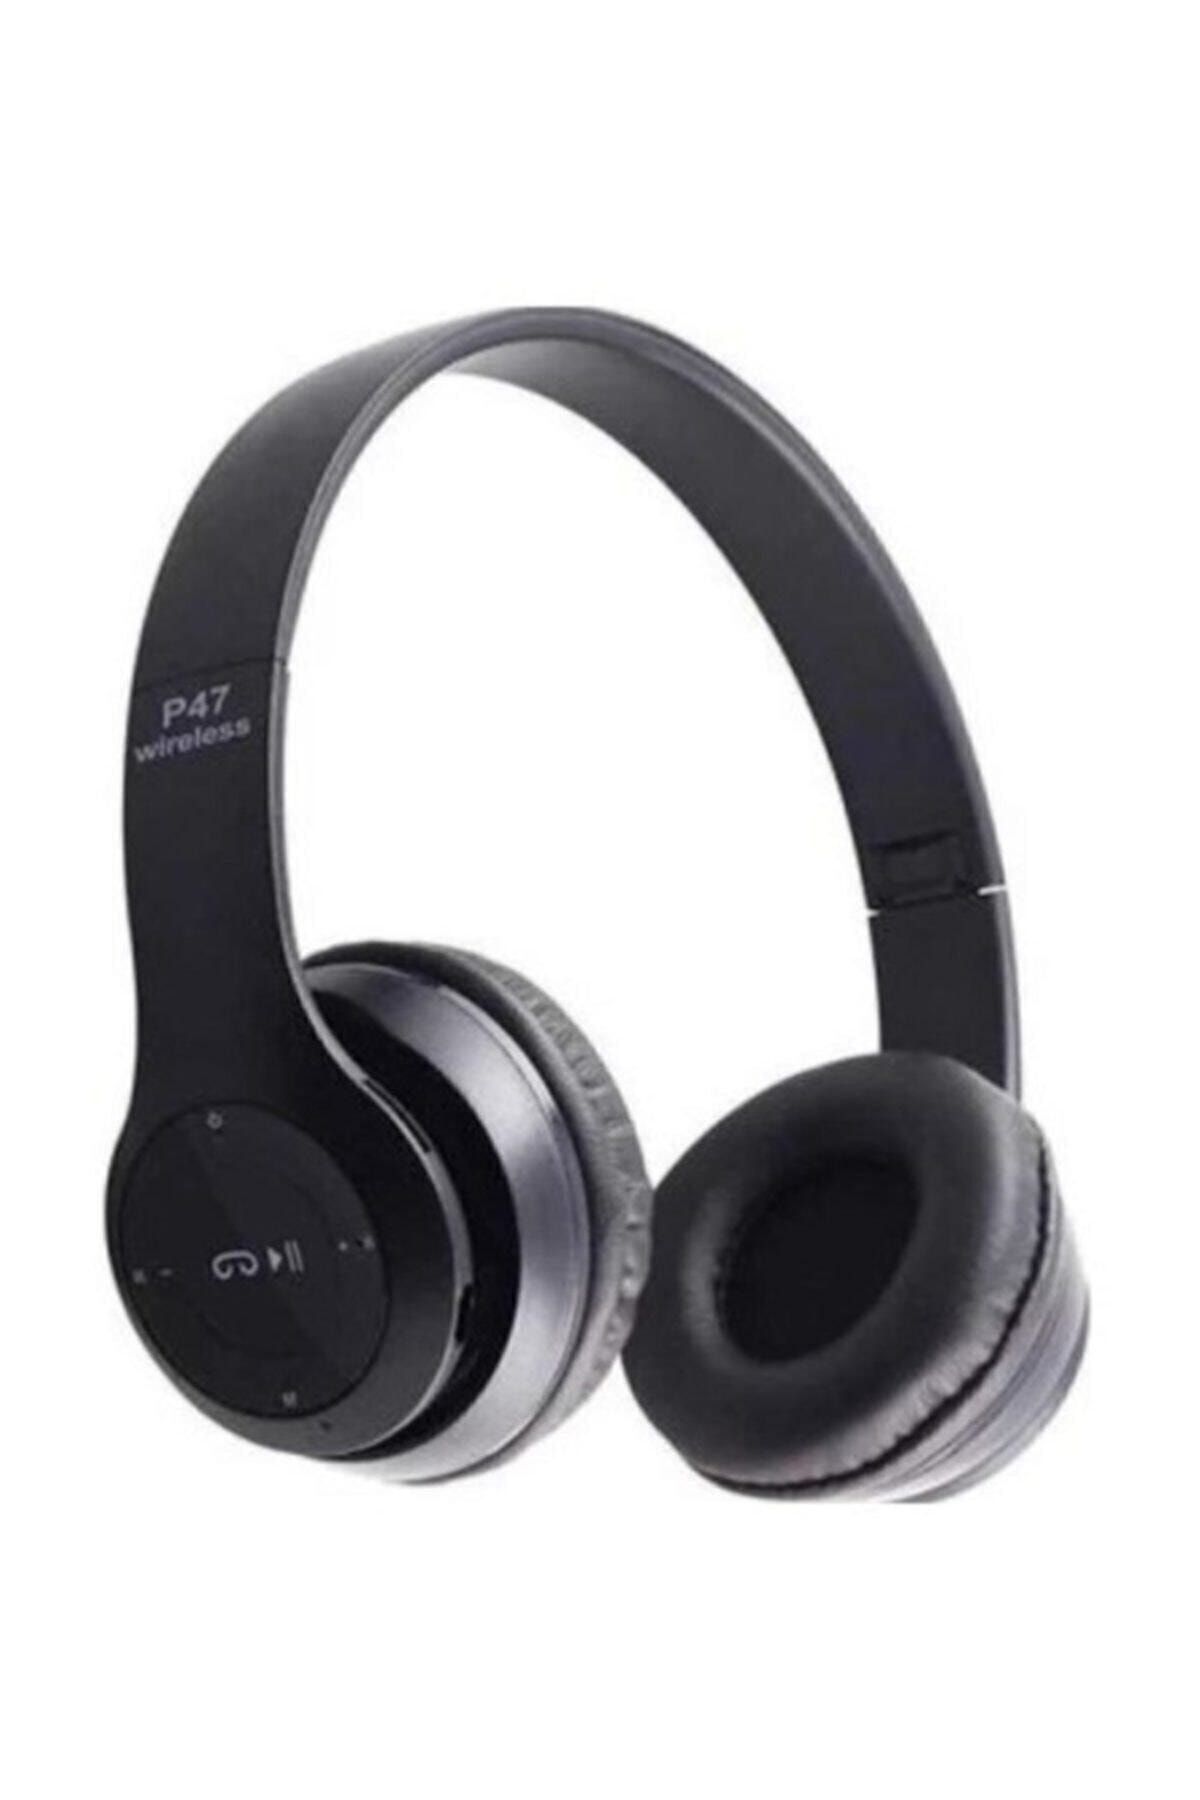 P47 Carsıbudur Wireless Bluetooth Kablosuz Extra Bass Radyolu Katlanabilir Kulaklık Genç Çocuk Siyah